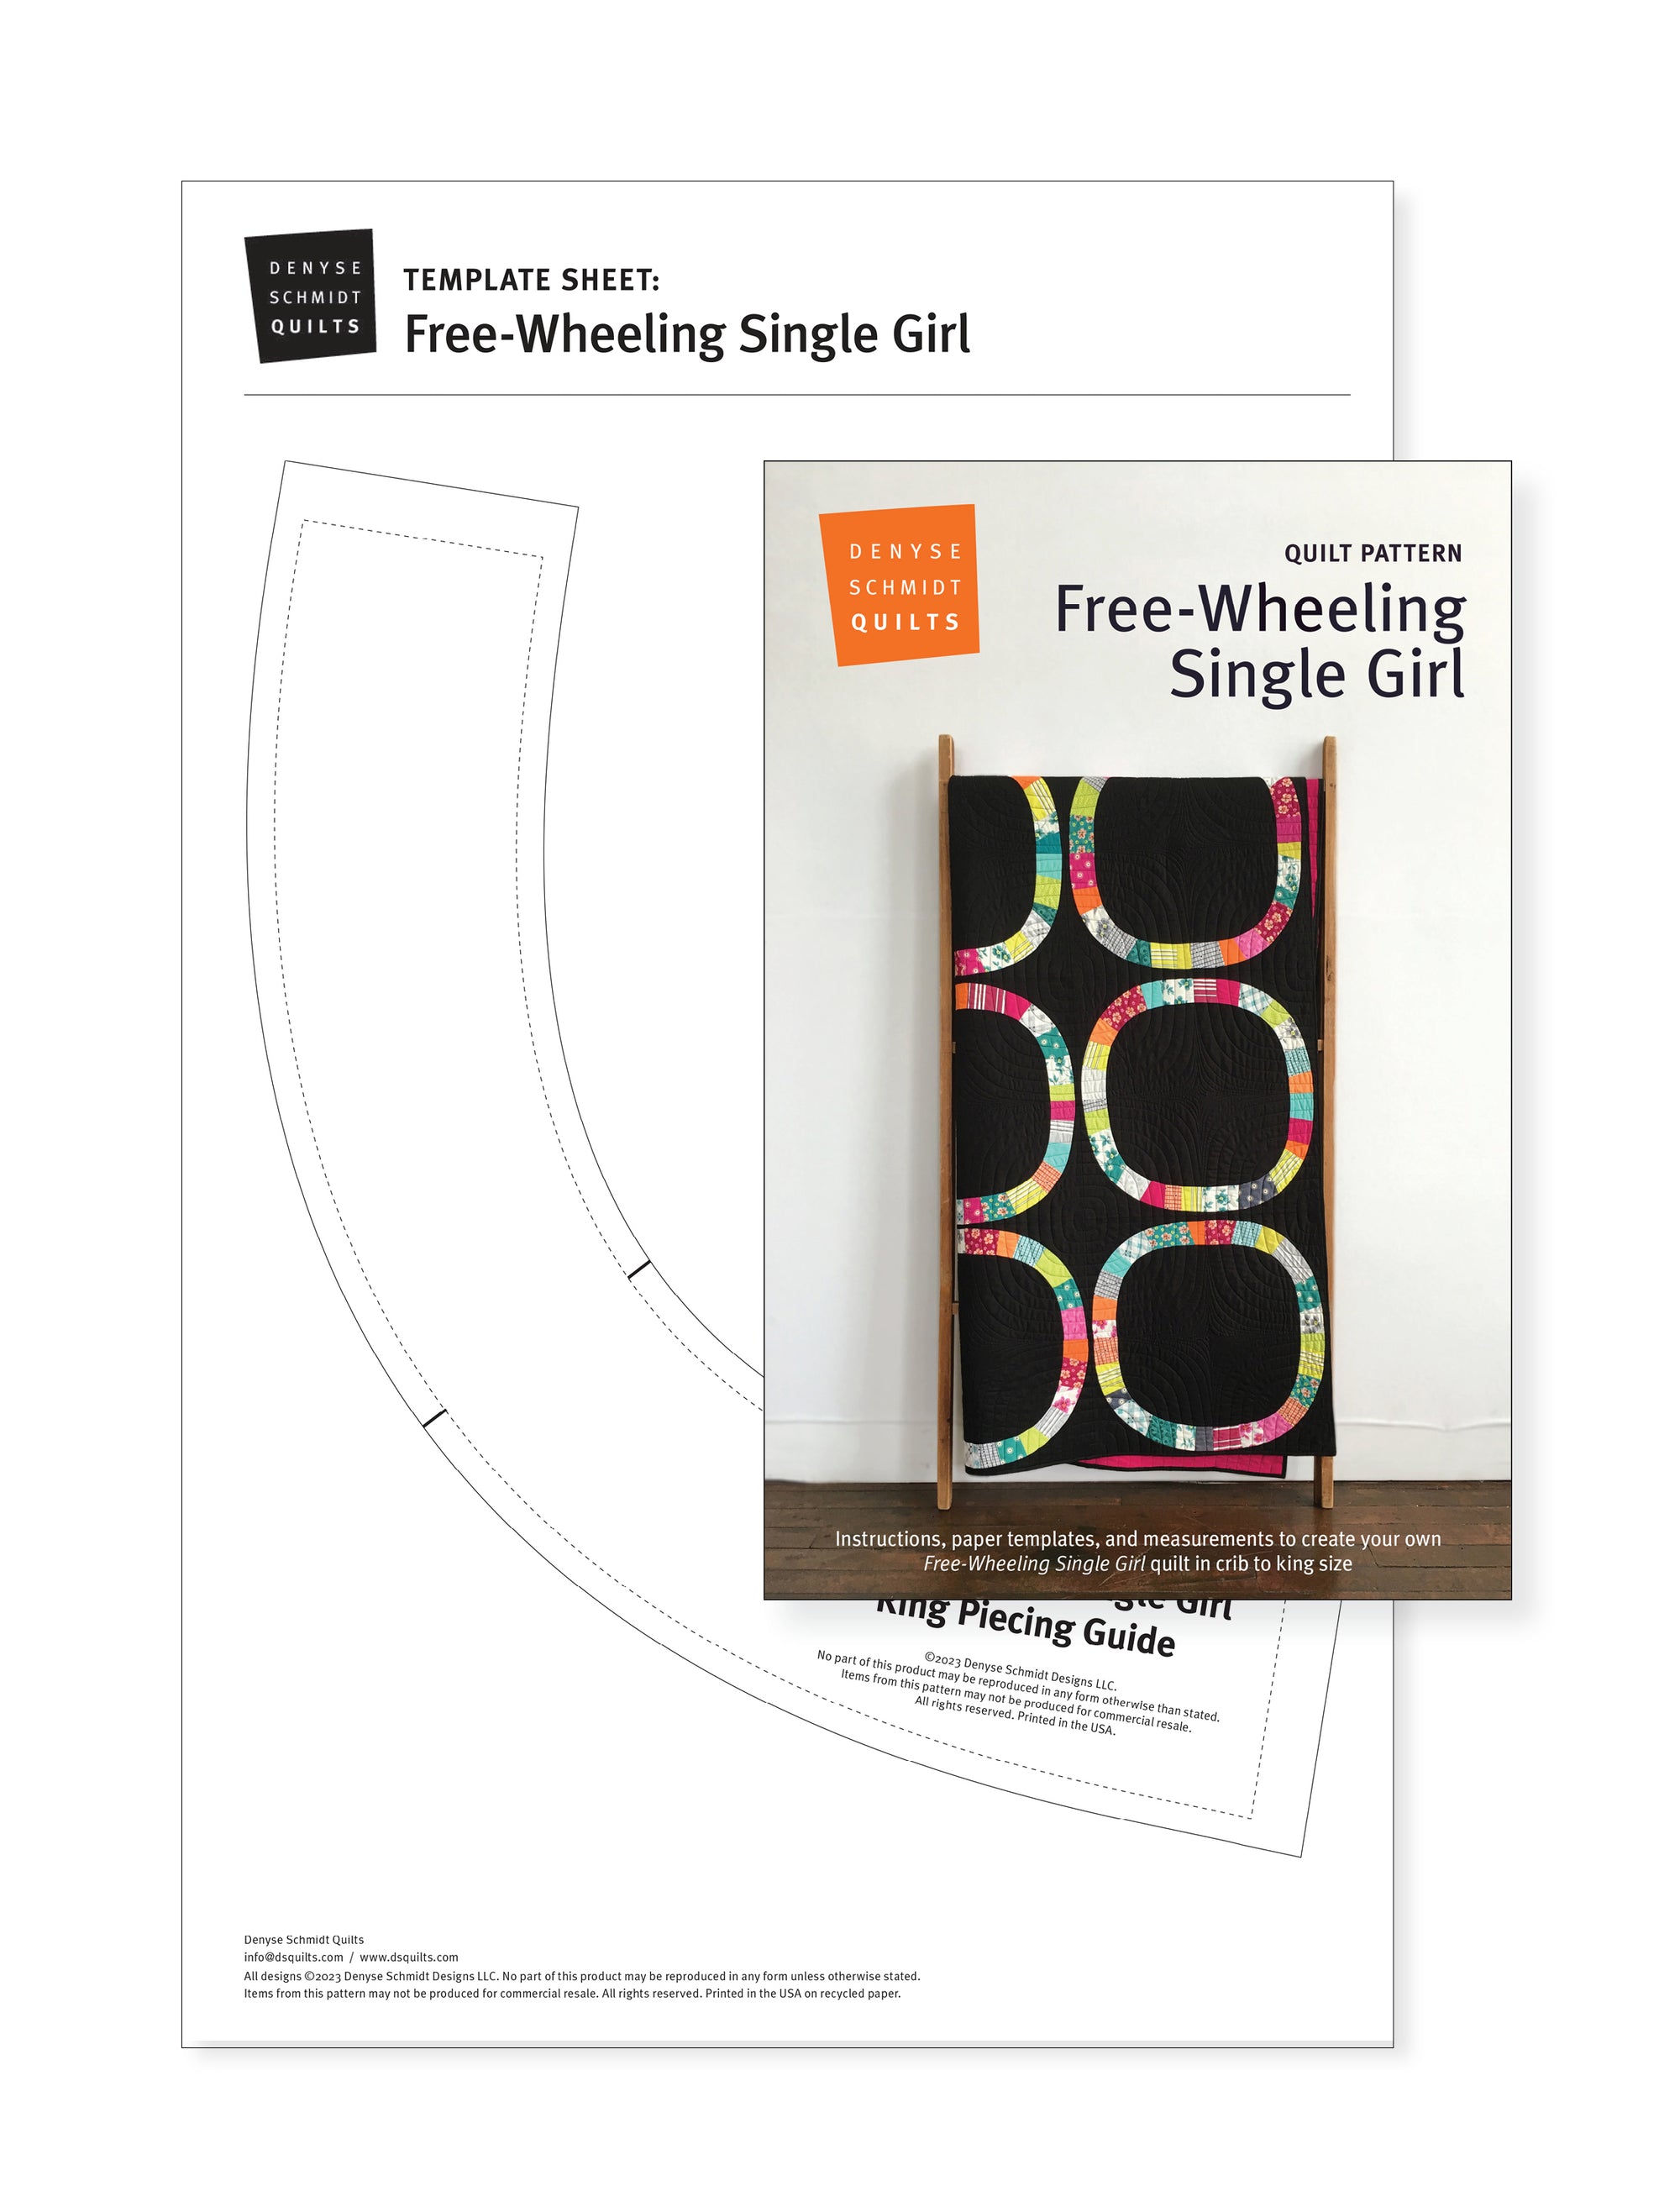 Free-Wheeling Single Girl quilt pattern